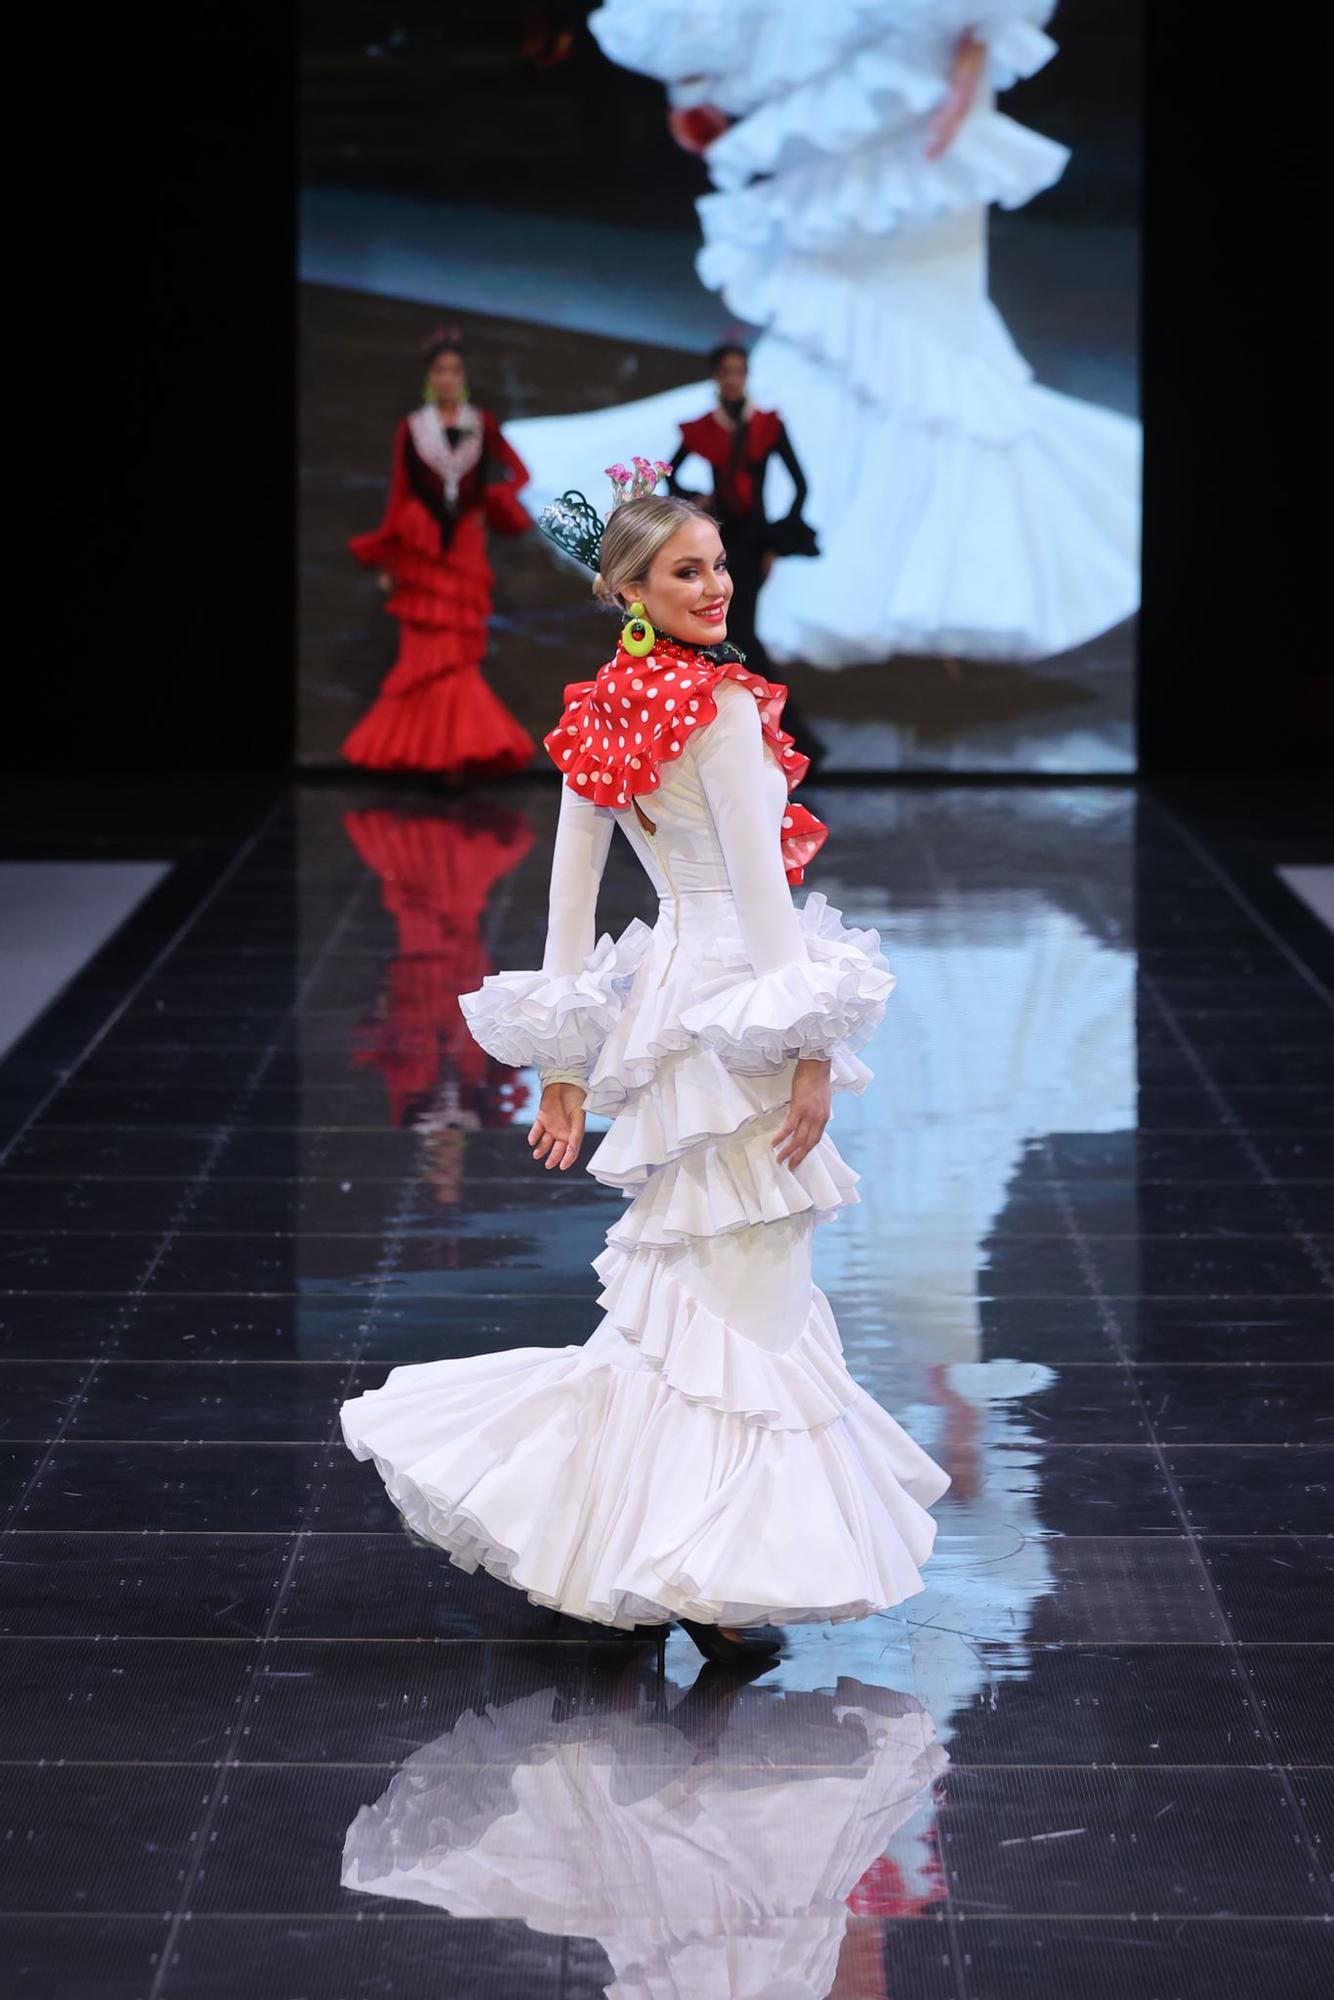 Yolanda Moda Flamenca